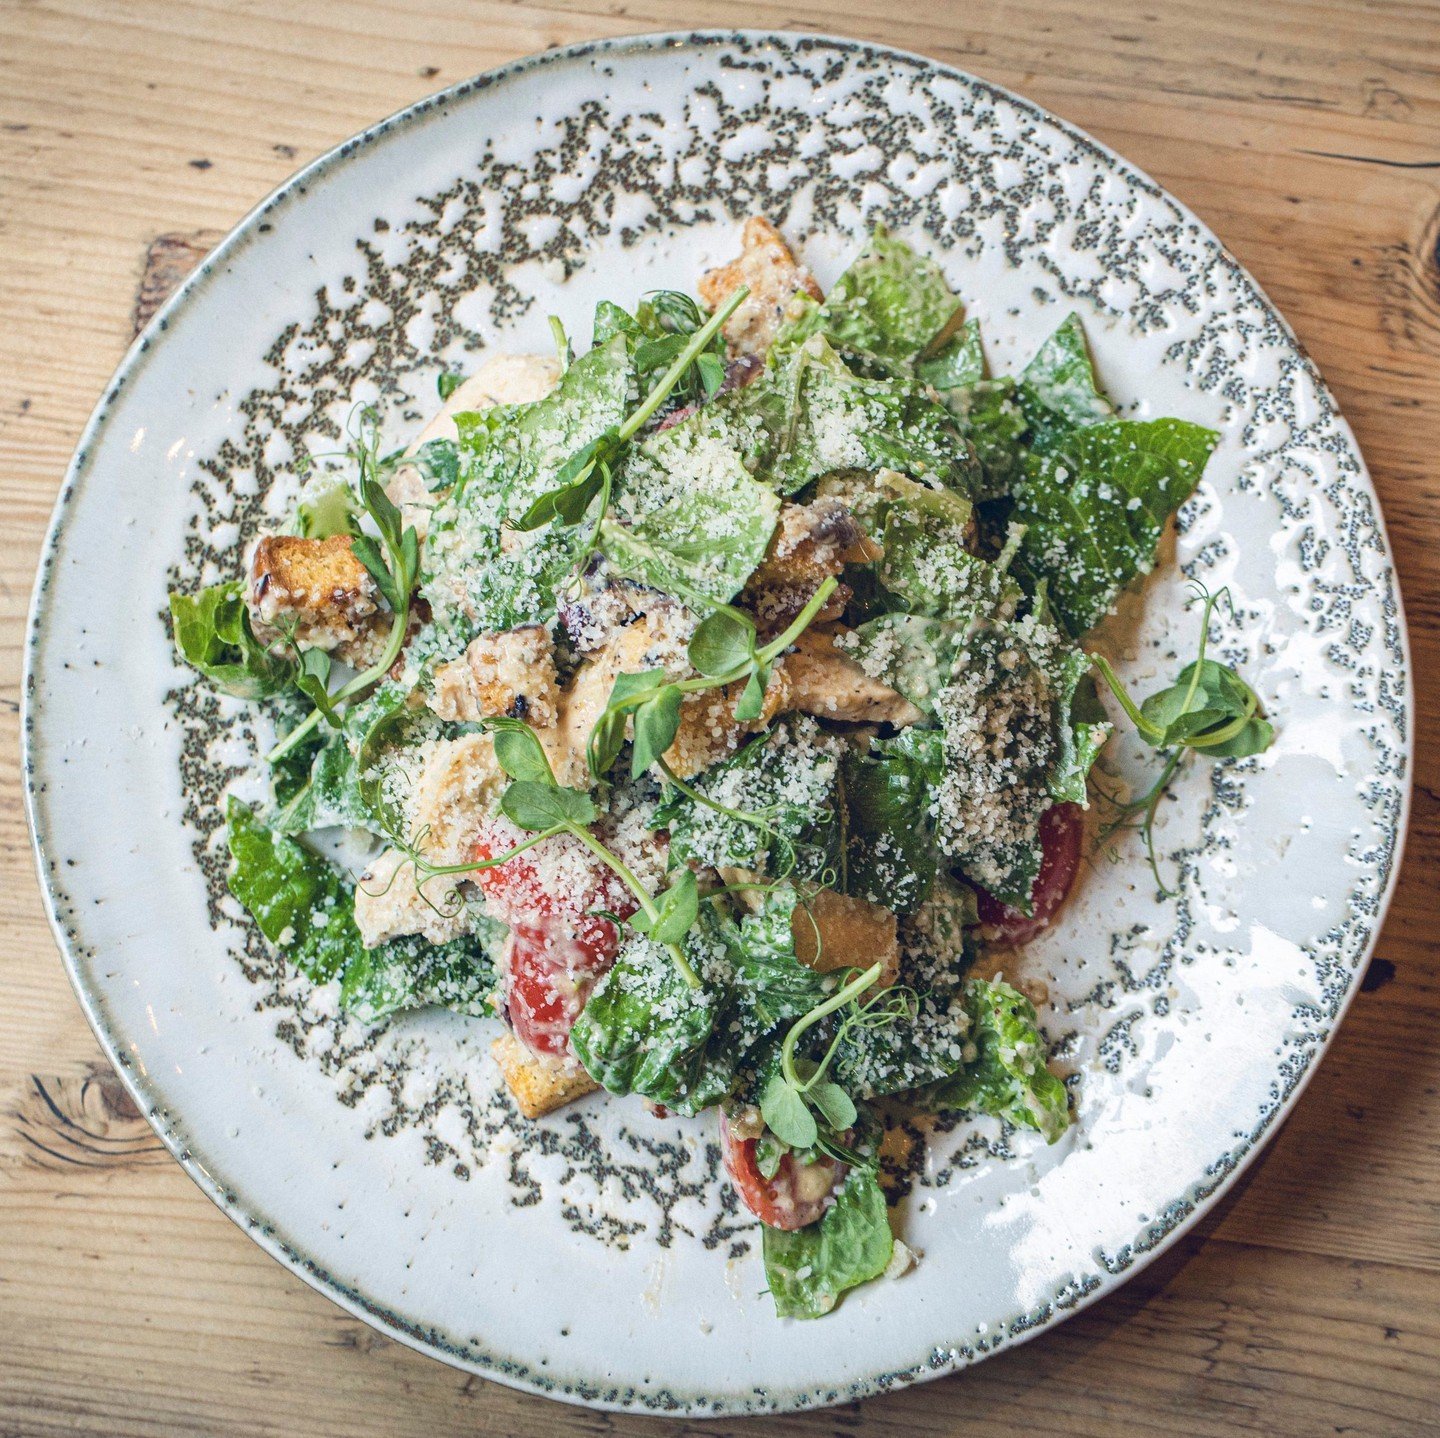 Chicken caesar salad, olives &amp; parmesan

#lunch #lunchtime #veggie #salad #caesarsalad